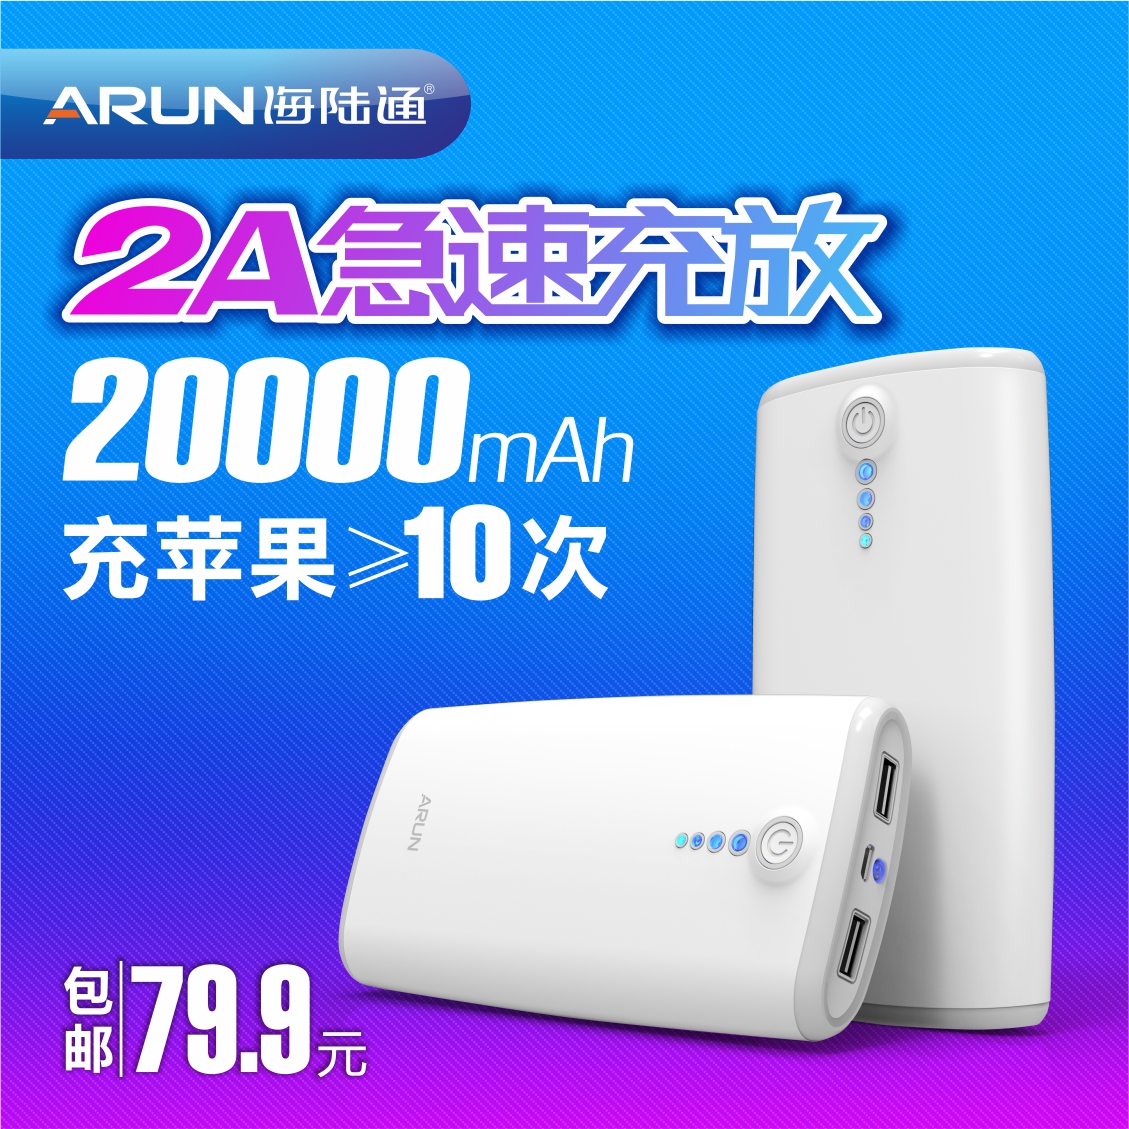 ARUN海陆通 Y208 大容量20000m毫安移动电源 通用正品手机充电宝